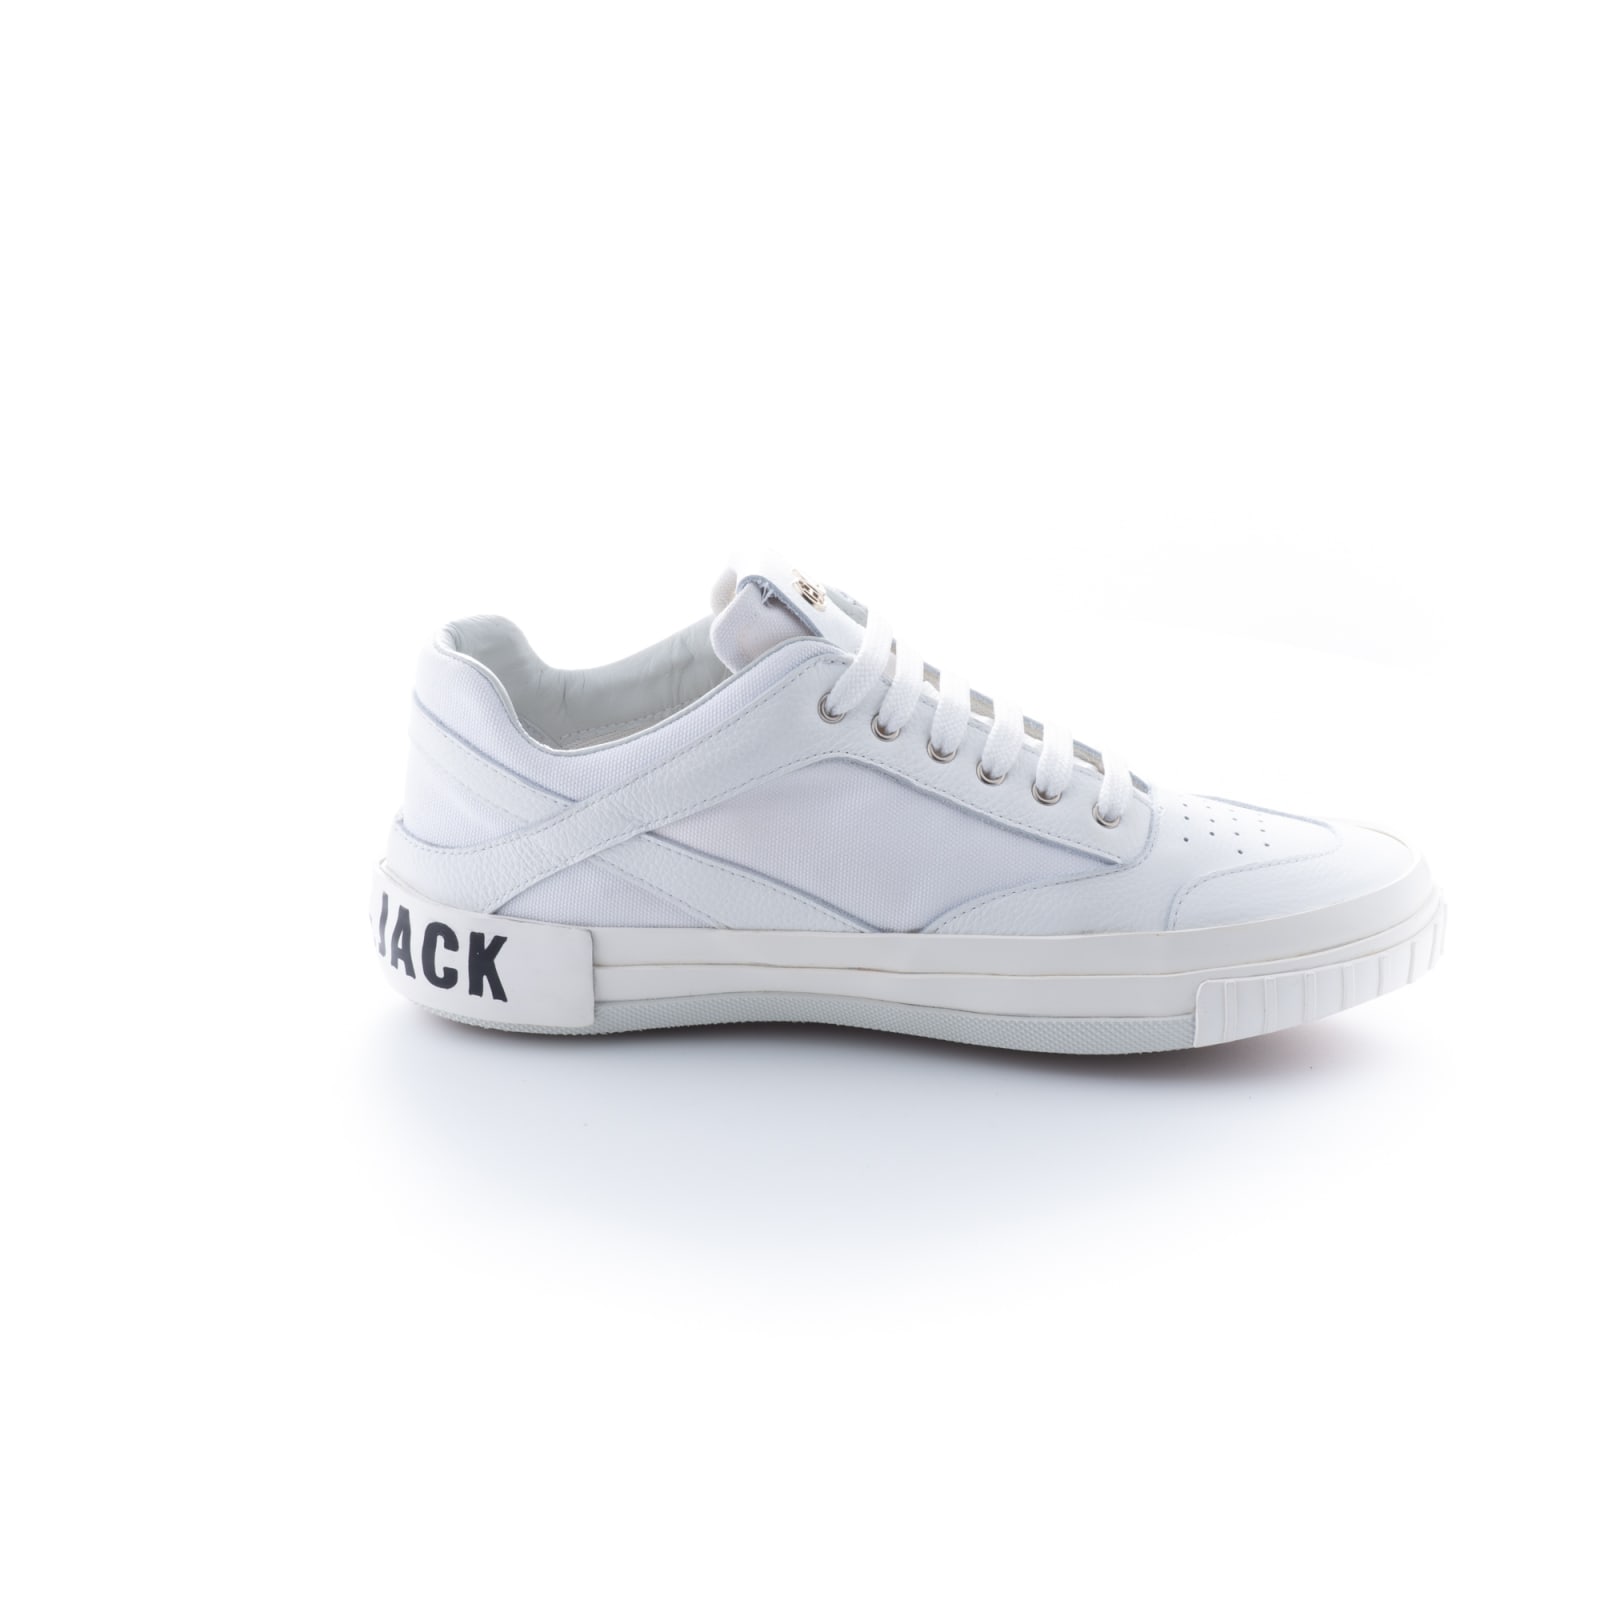 Hide & Jack Volcanic White Sneakers